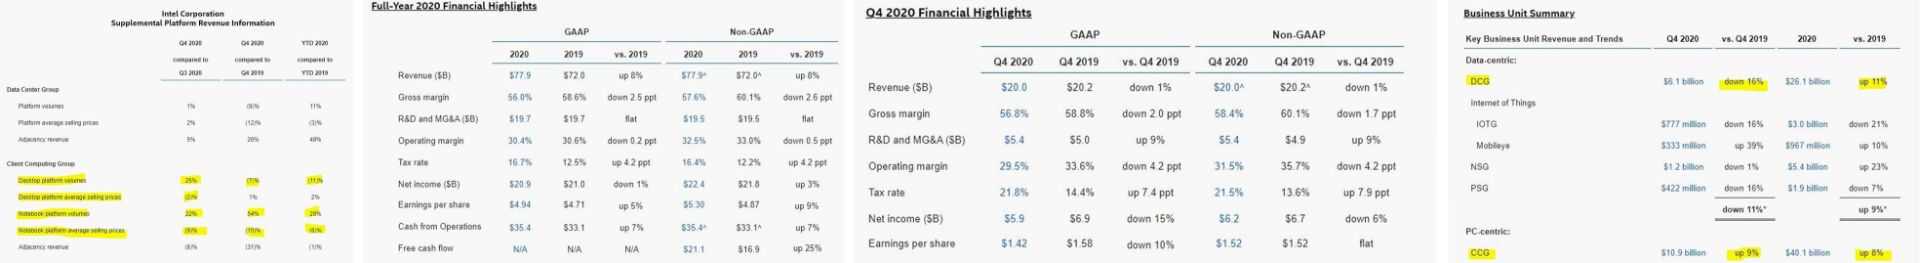 جدول گزارش مالی فصل چهارم سال 2020 اینتل / Intel